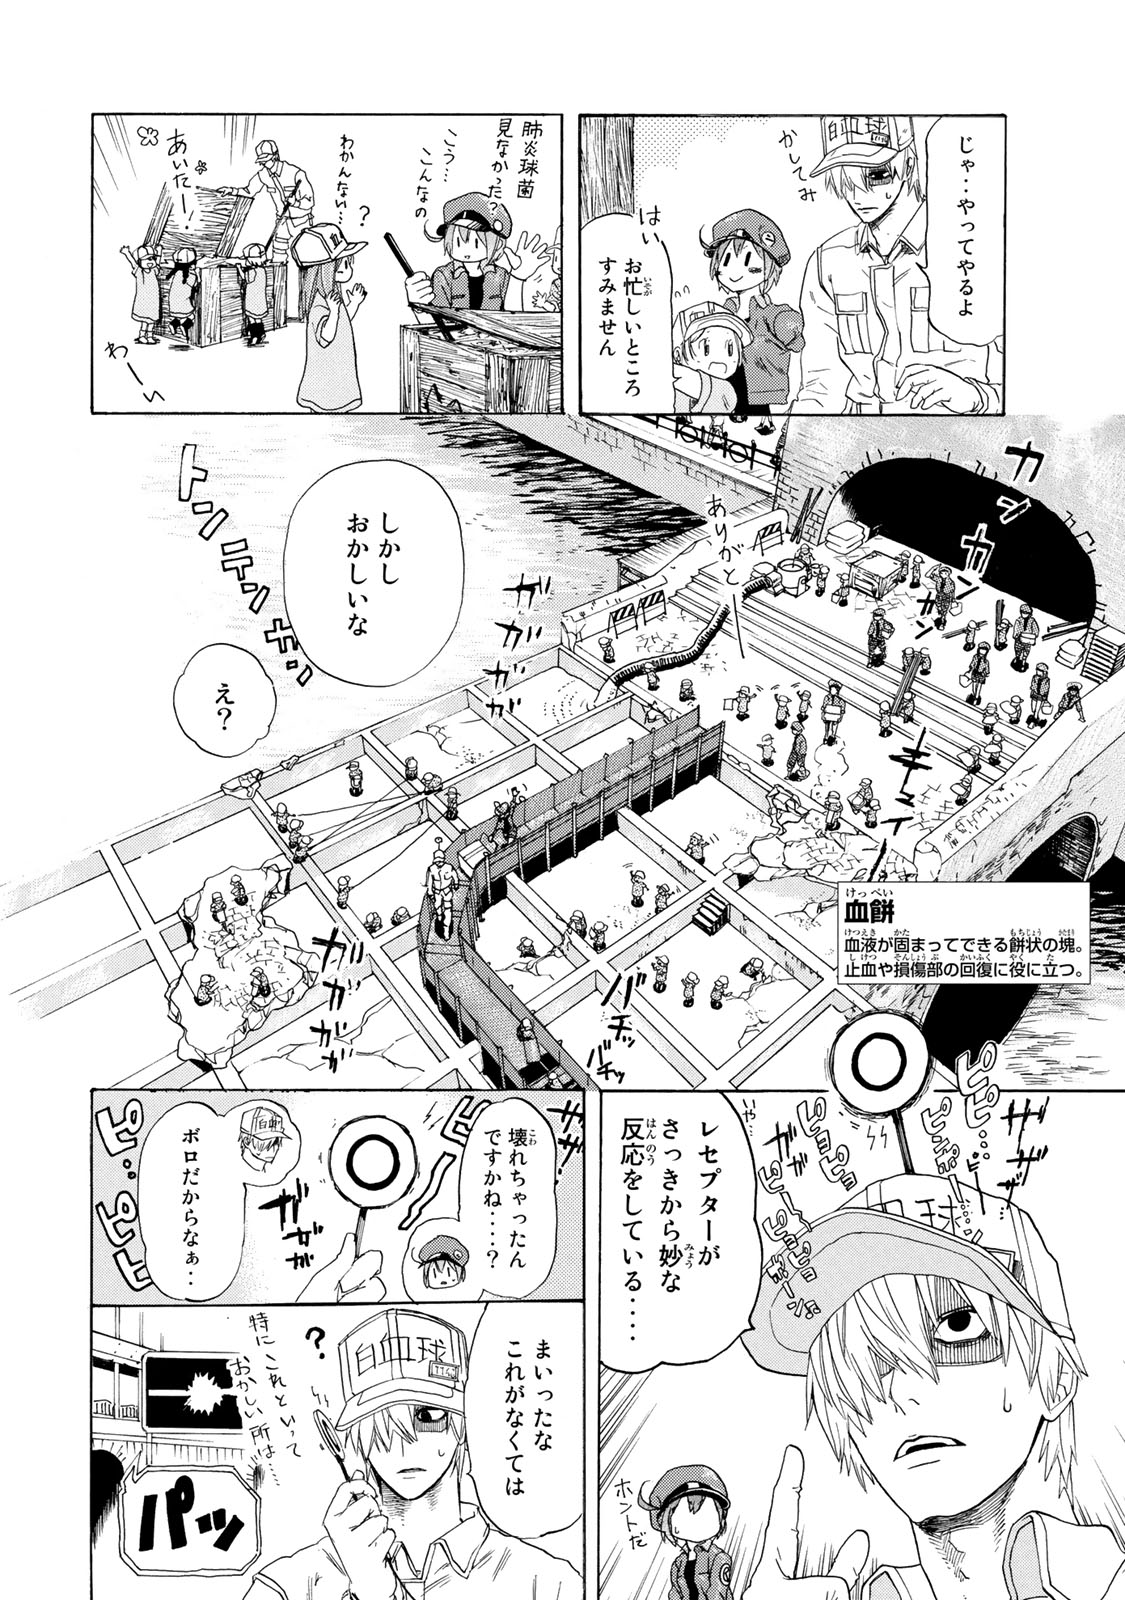 Hataraku Saibou - Chapter 1 - Page 26